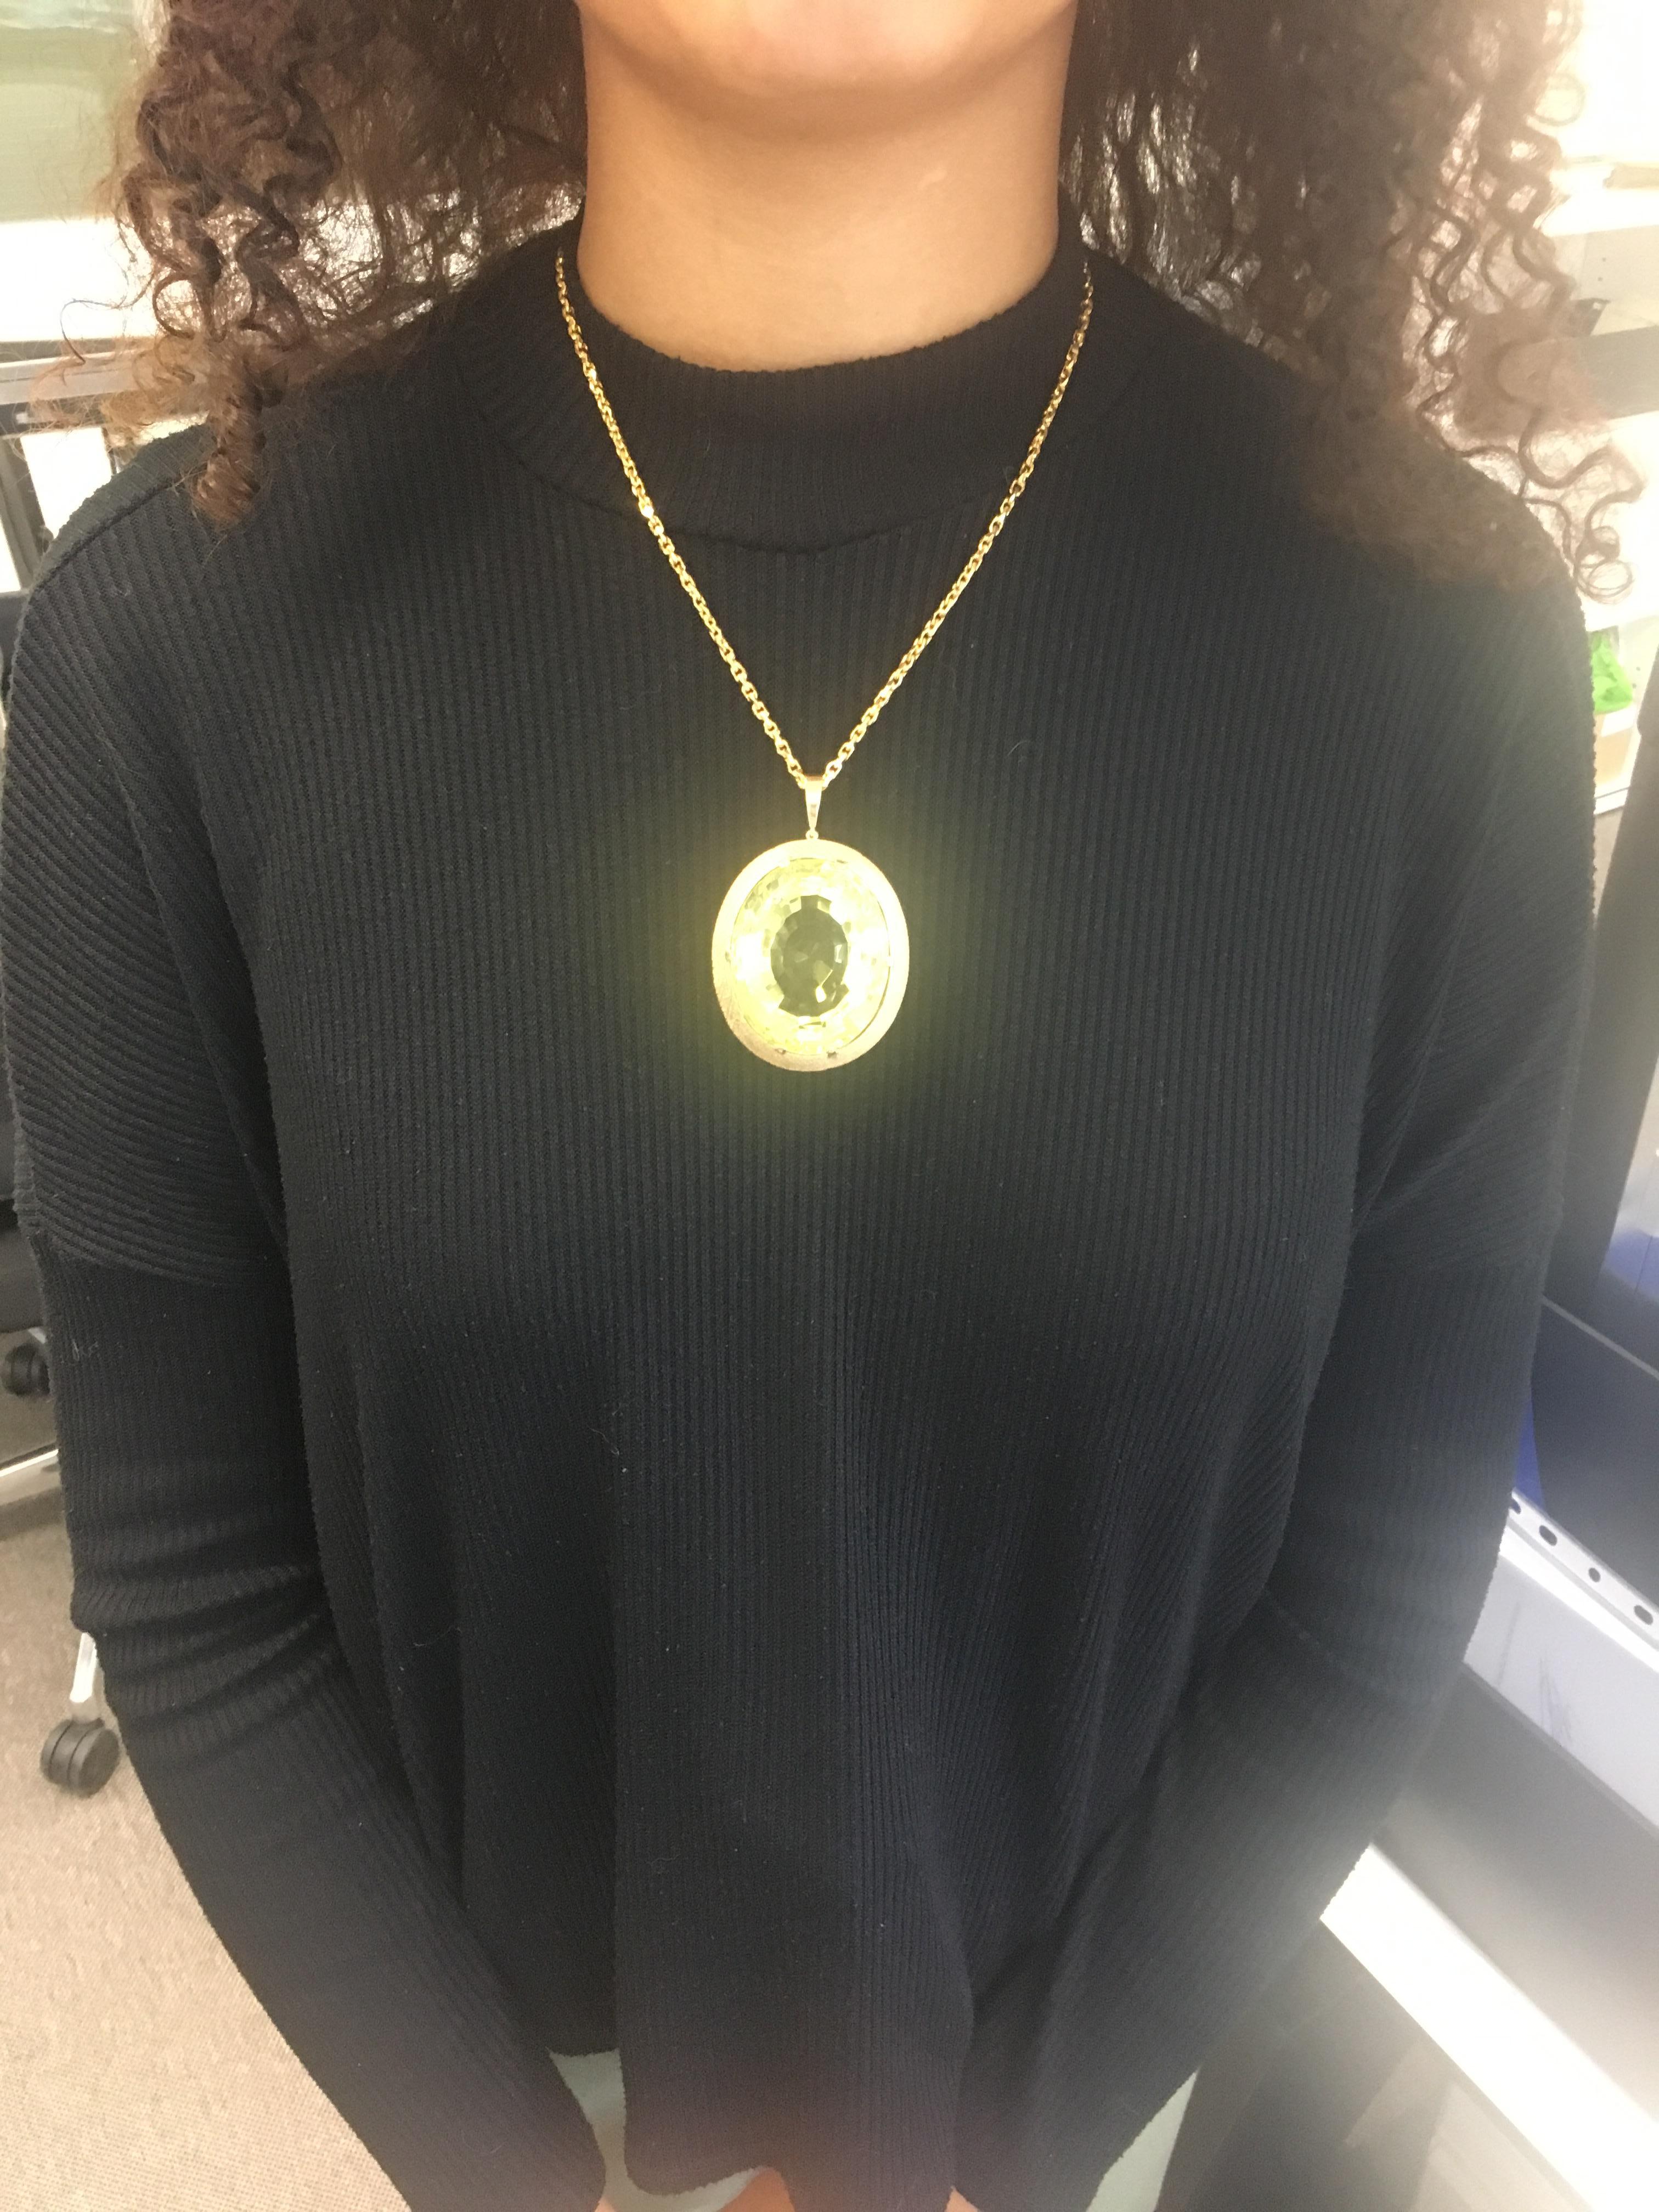 Massive Lemonquarz Pendant Necklace in Yellow Gold 750 For Sale 3